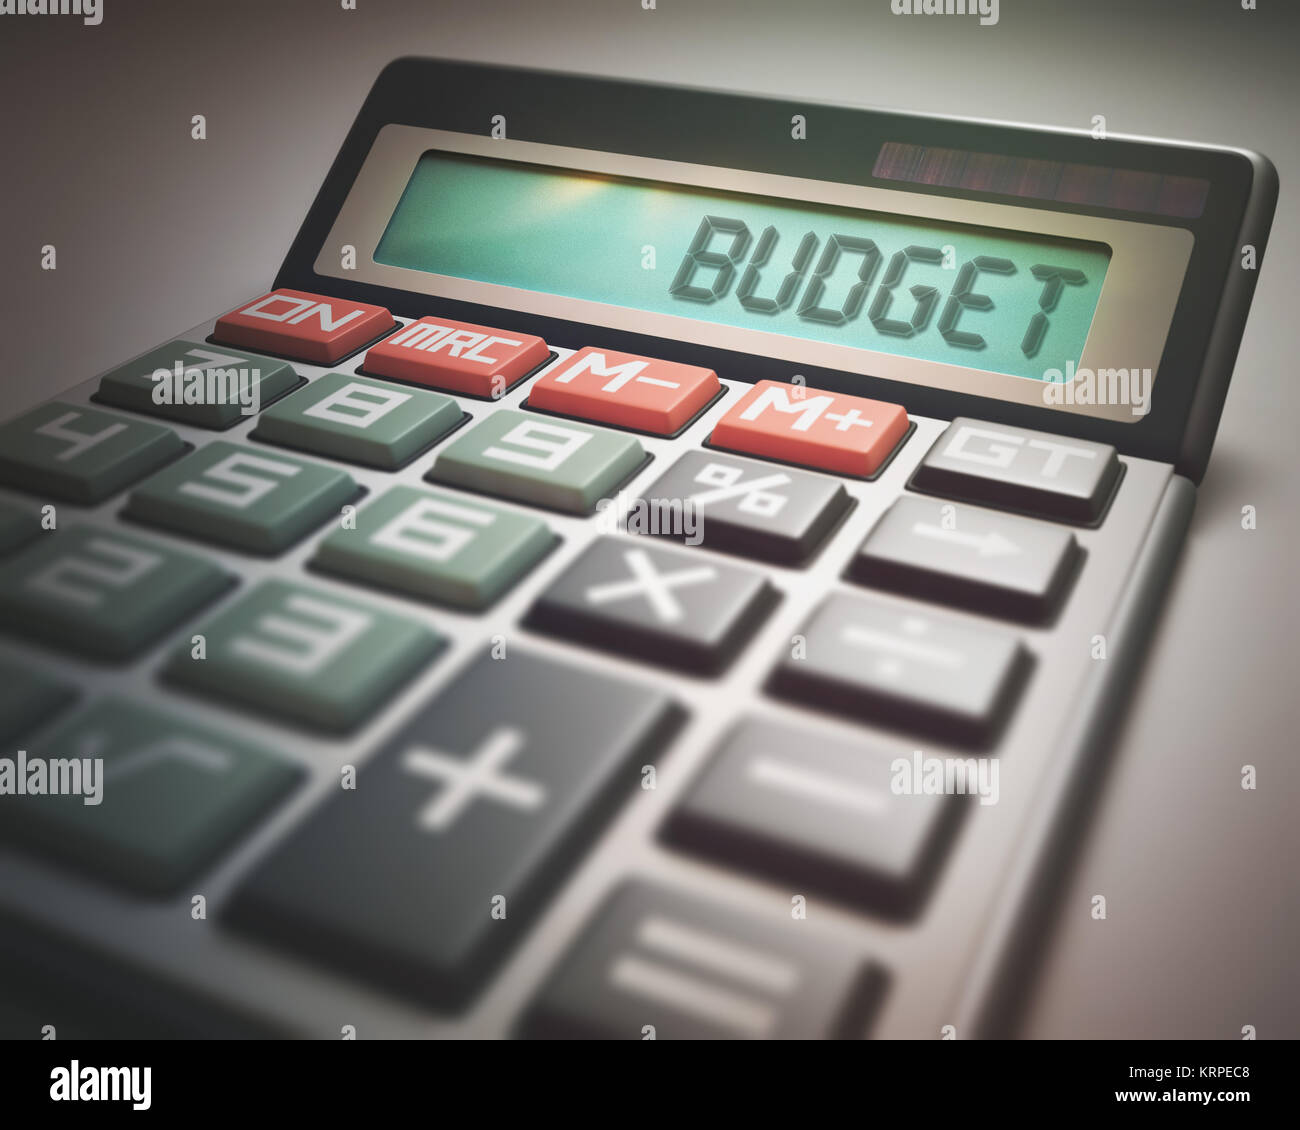 Budget Calculator Stock Photo